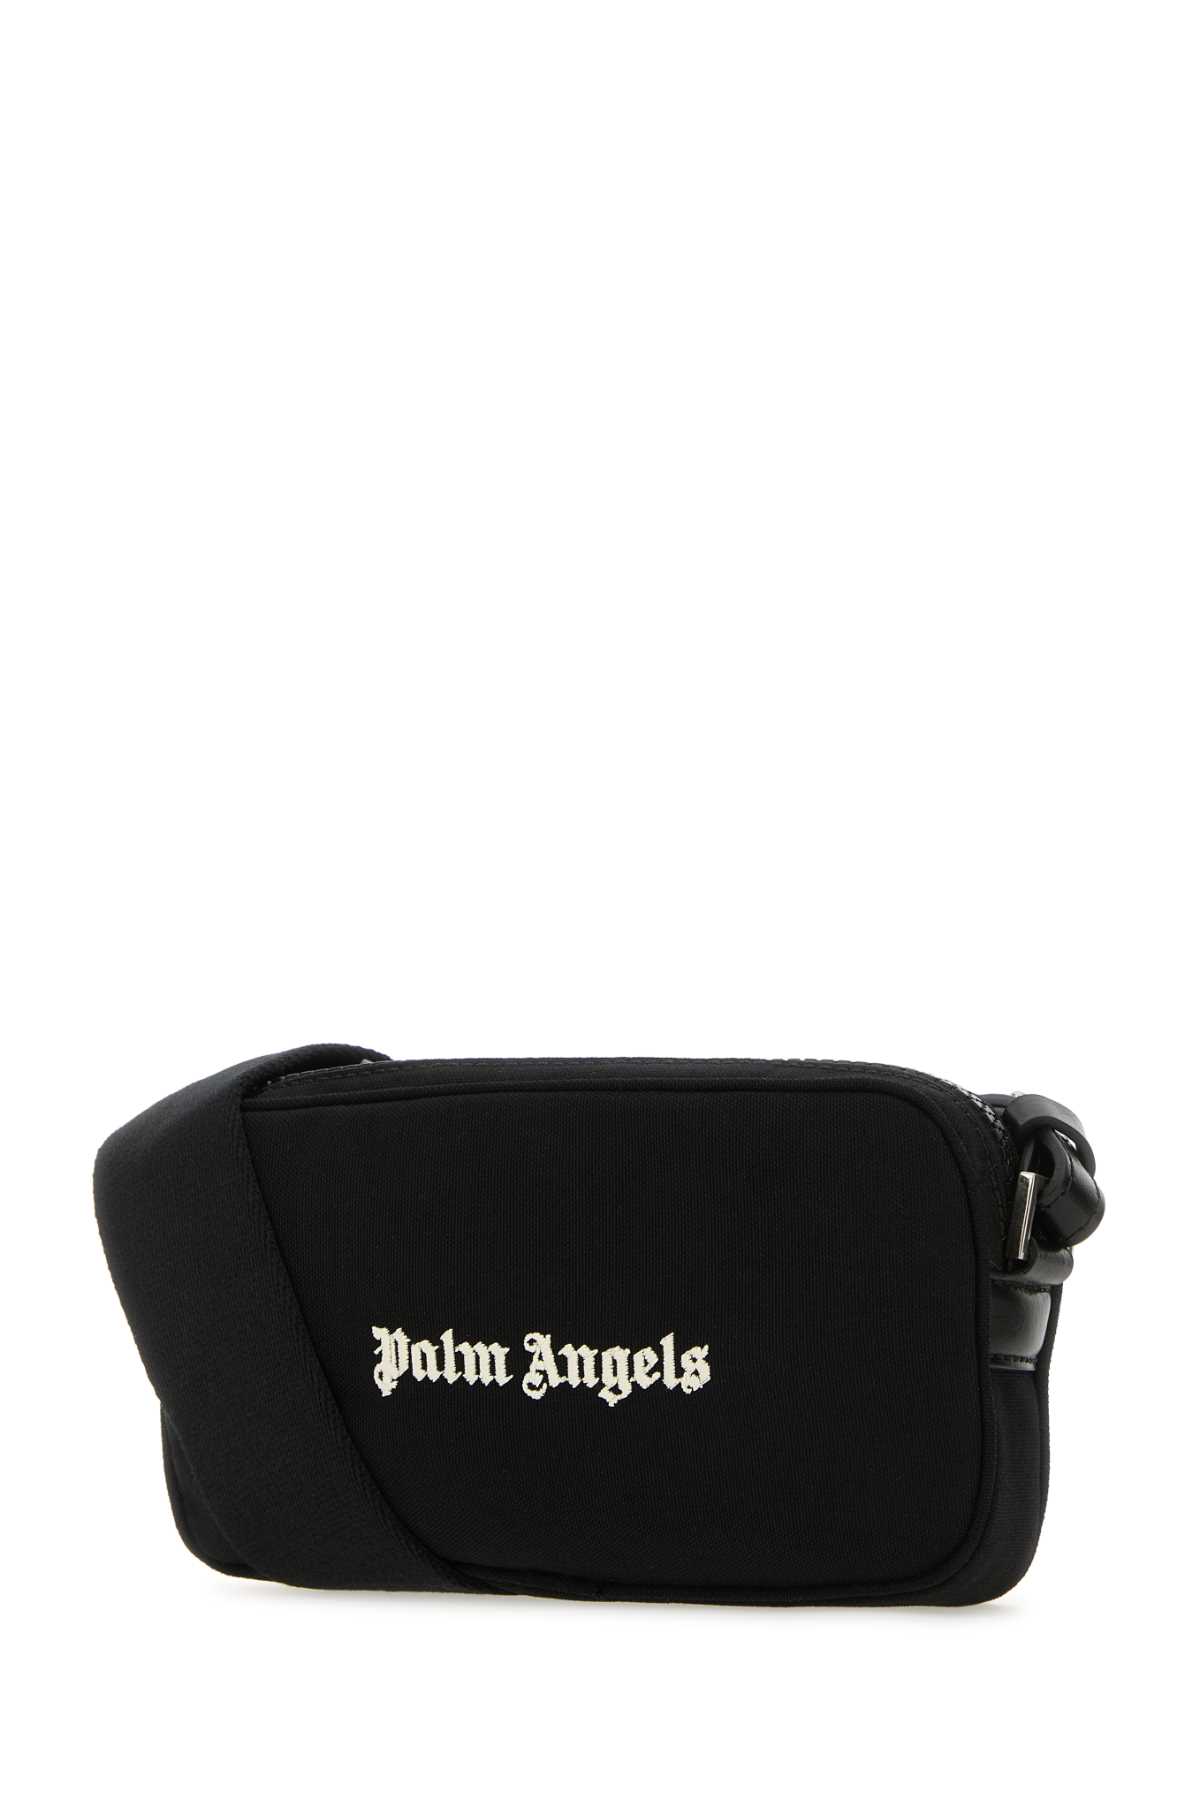 Palm Angels Black Canvas Crossbody Bag In Blackwhit